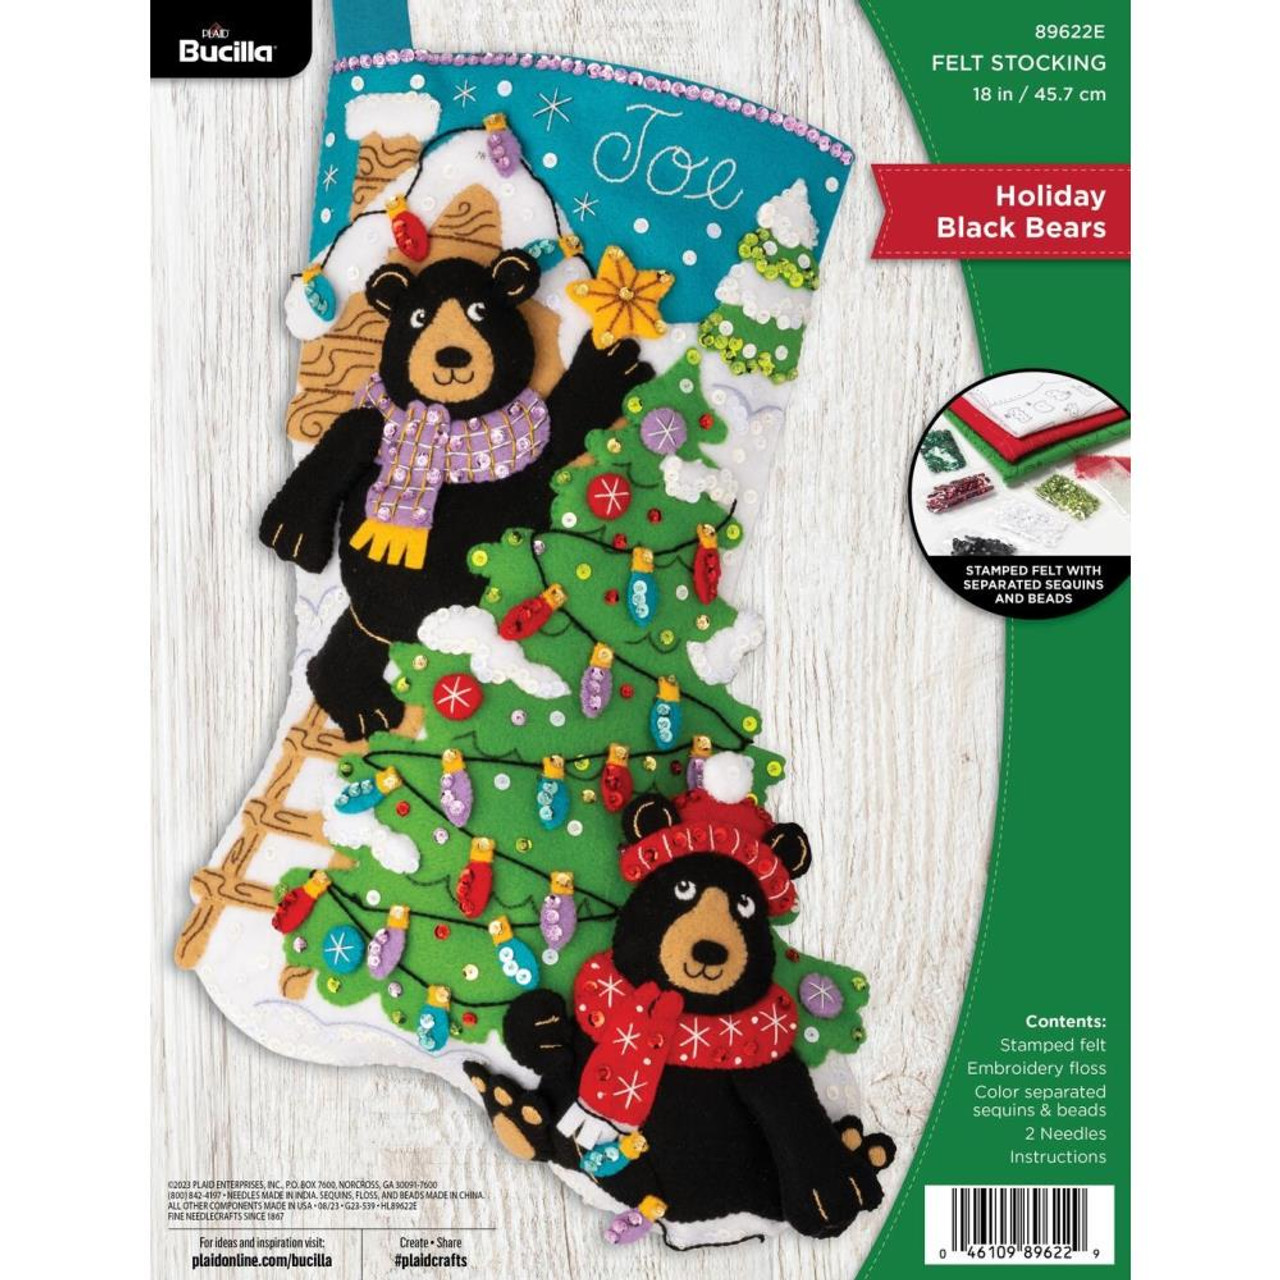 Bucilla Felt Applique Christmas Stocking Kit TEDDY BEAR 18 inch